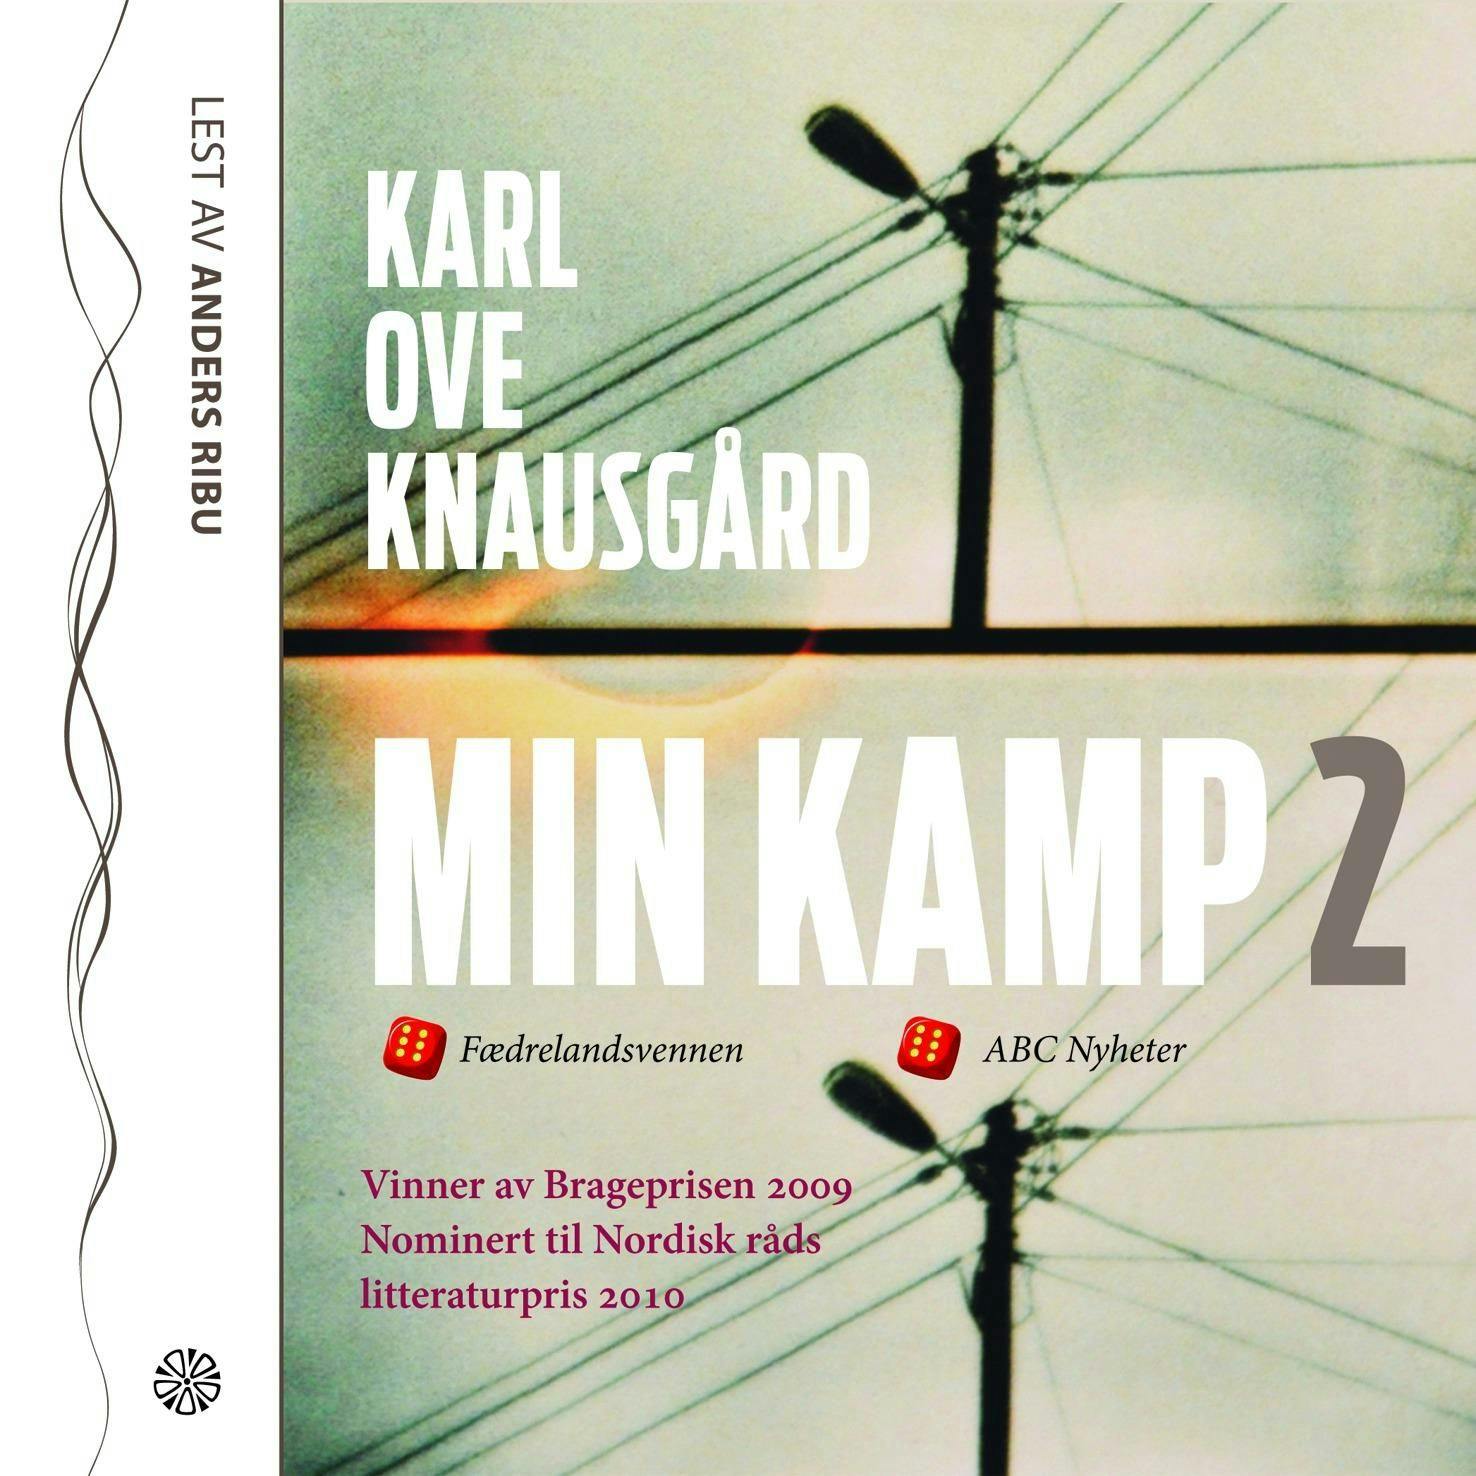 Min kamp 2 - Karl Ove Knausgård